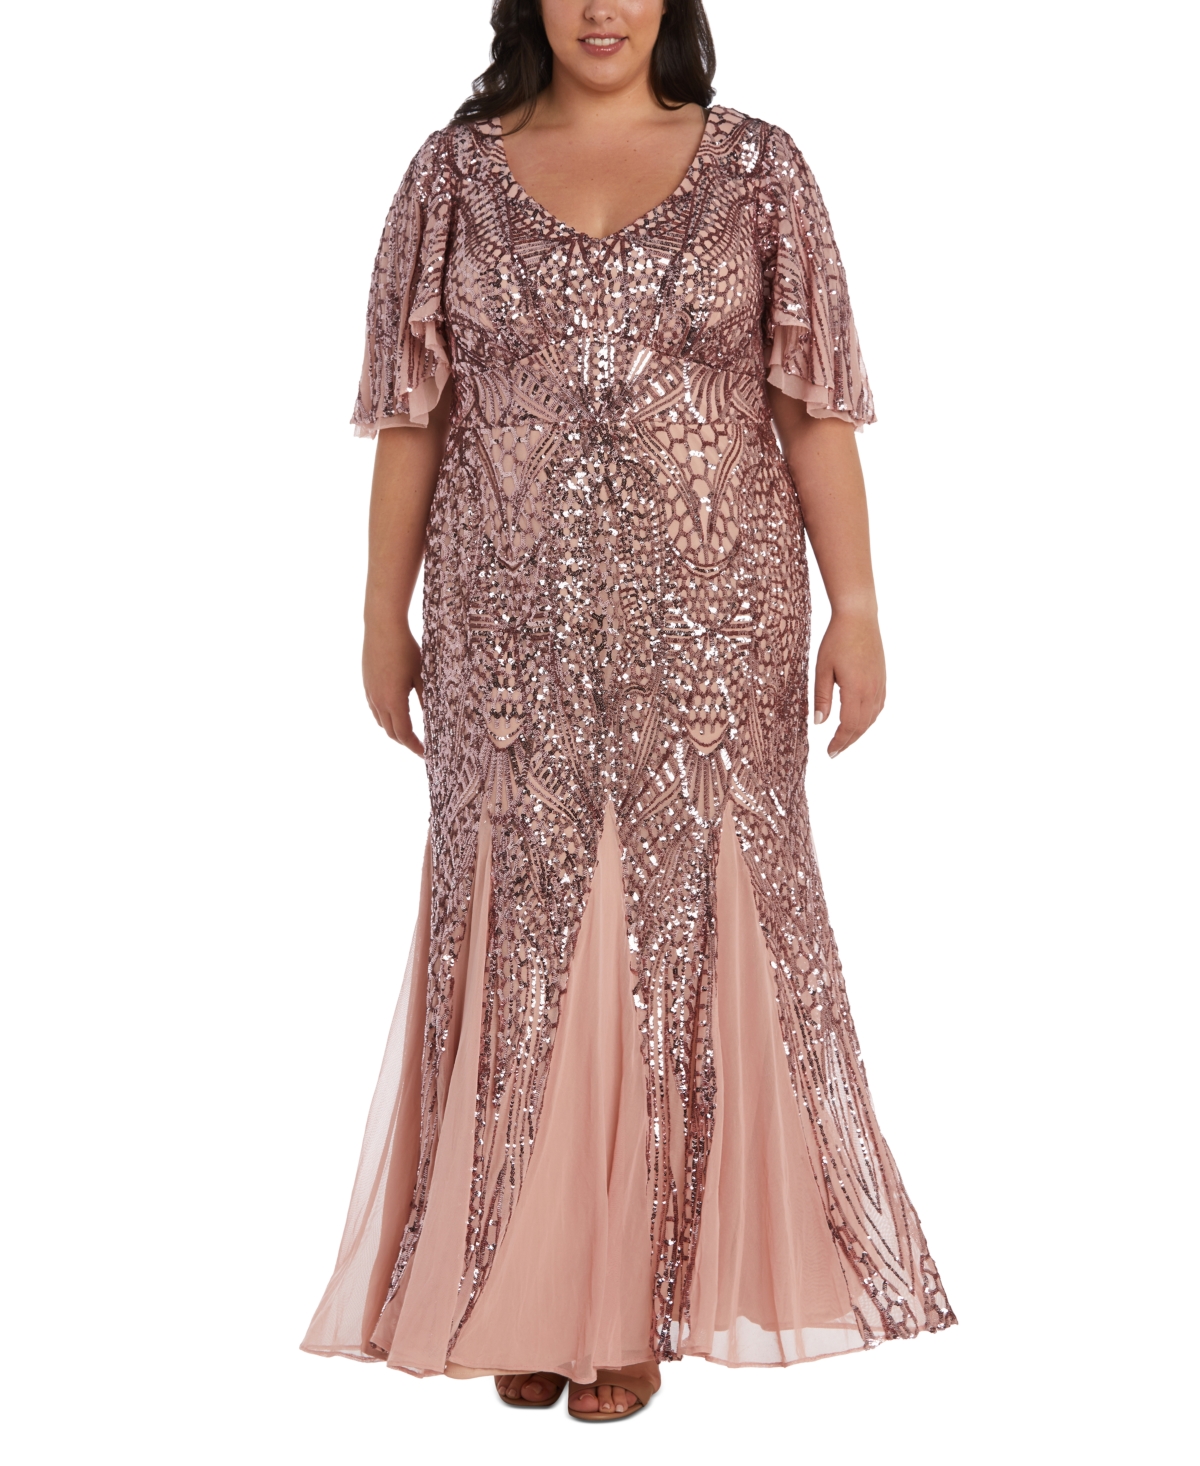 Great Gatsby Dress – Great Gatsby Dresses for Sale Nightway Plus Size Sequin Flutter-Sleeve Godet Gown - Mauve $209.00 AT vintagedancer.com